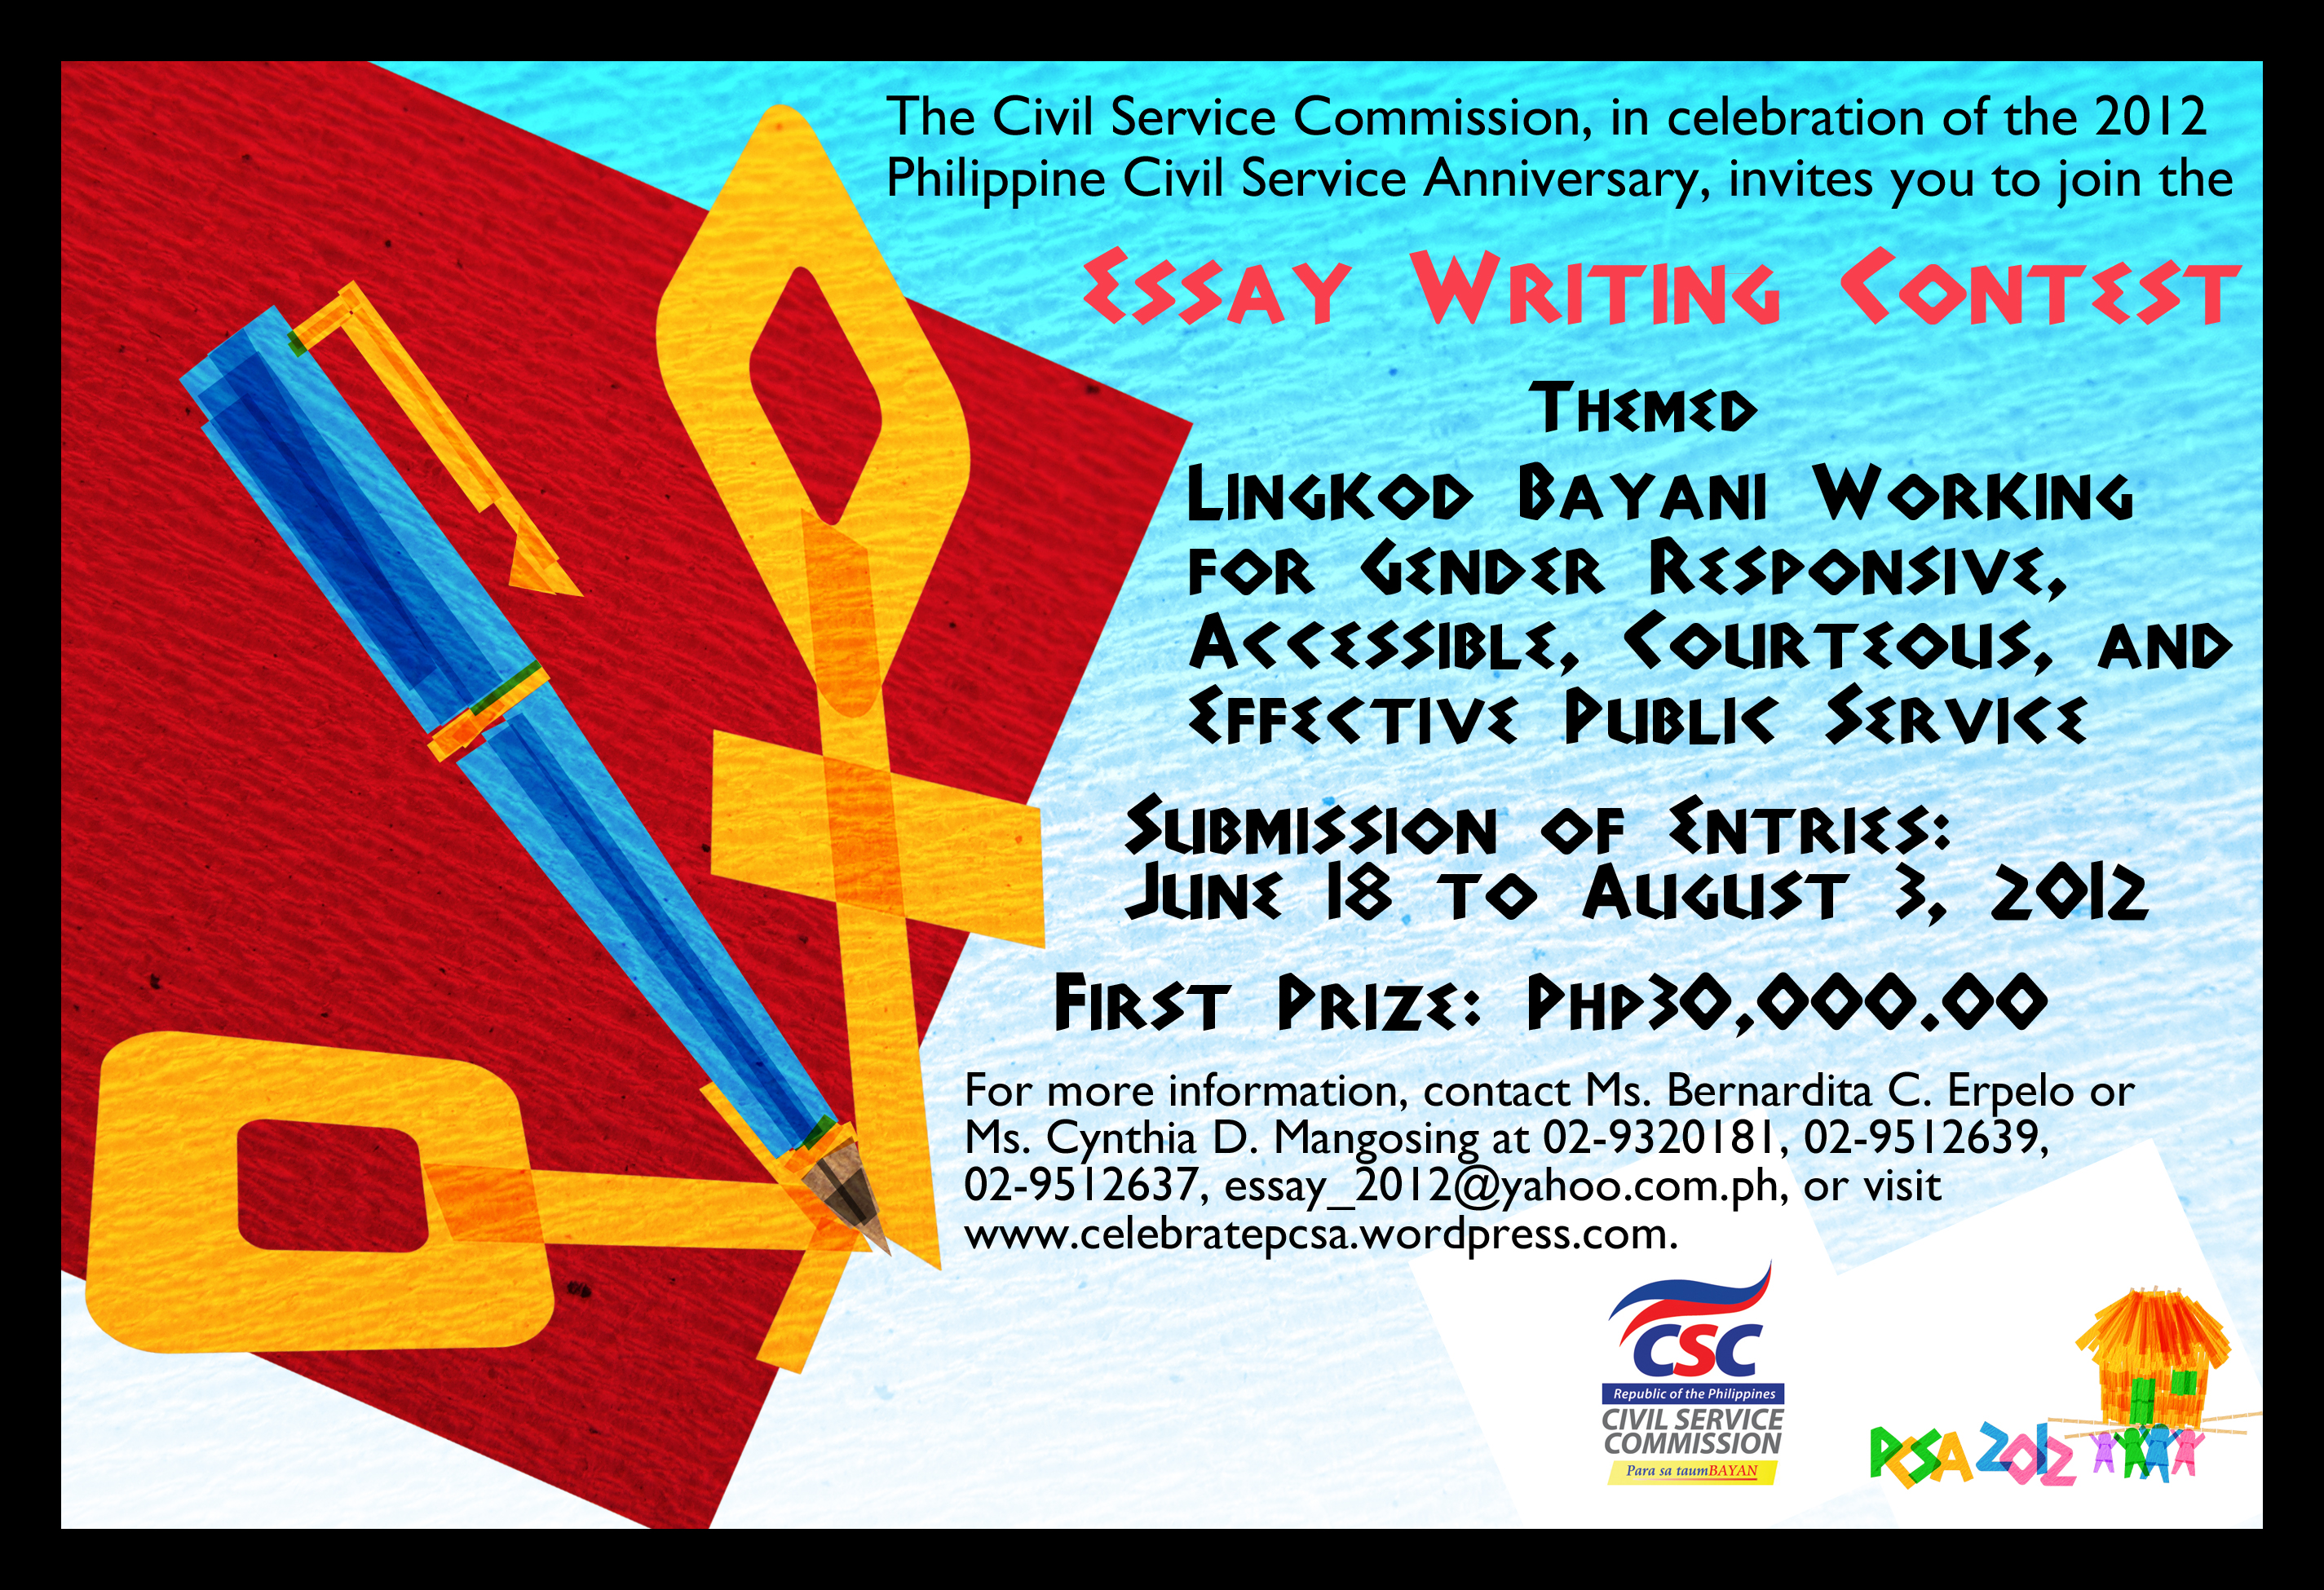 Civil service essay writing contest